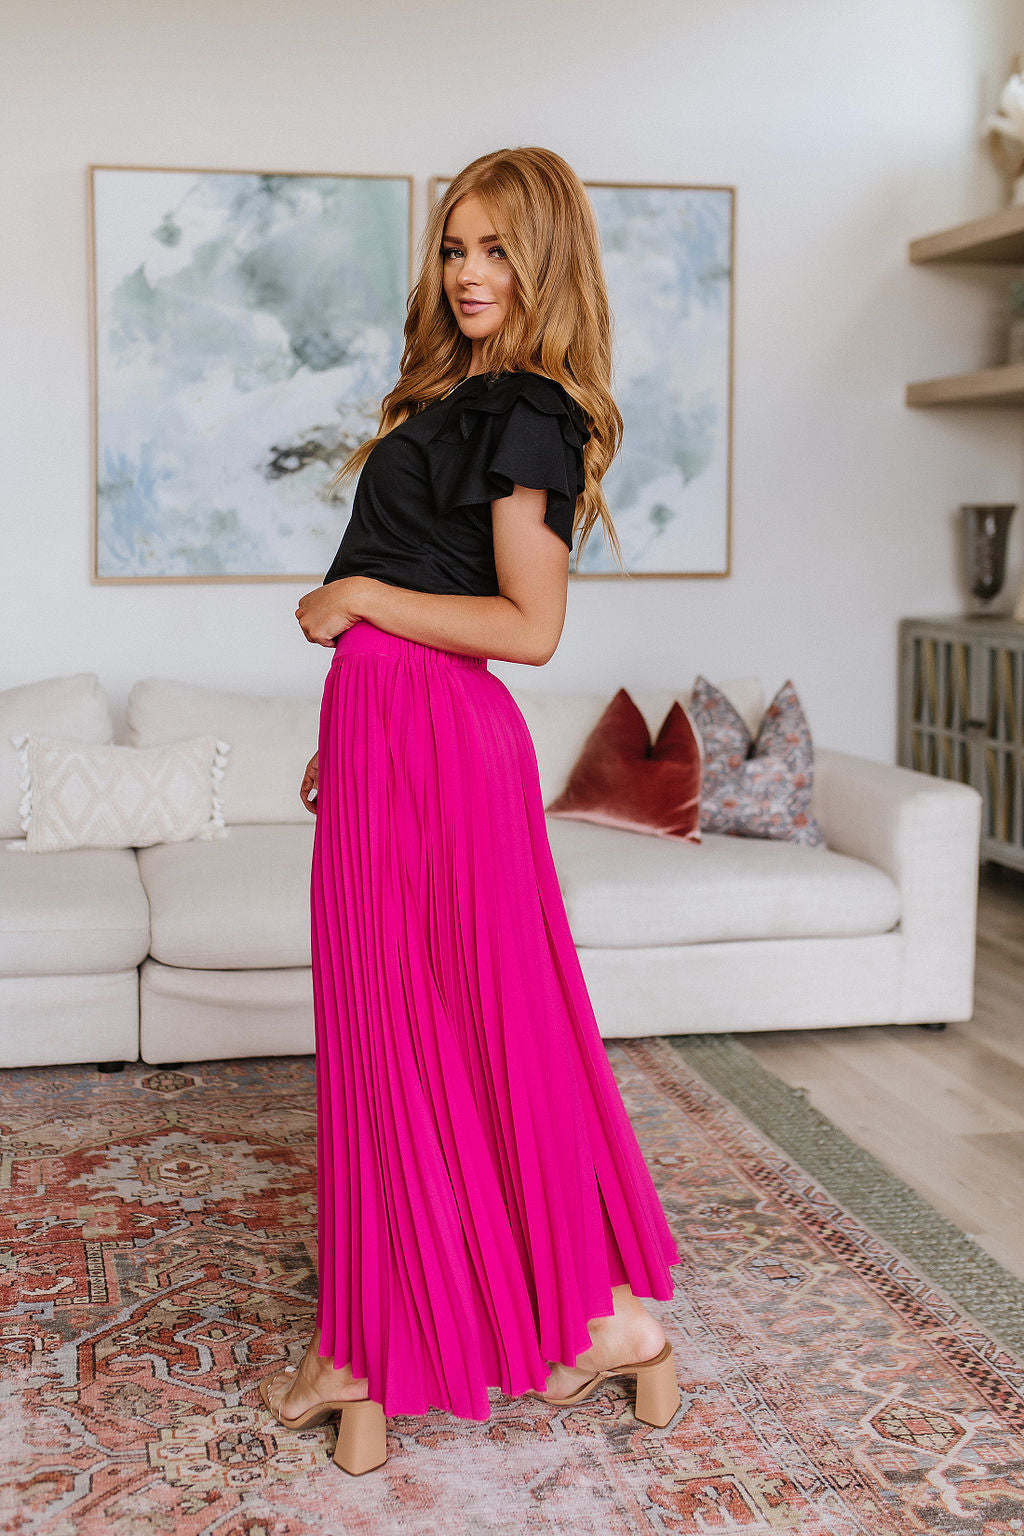 Just Too Hot Midi Skirt in Hot Pink - WEBSITE EXCLUSIVE